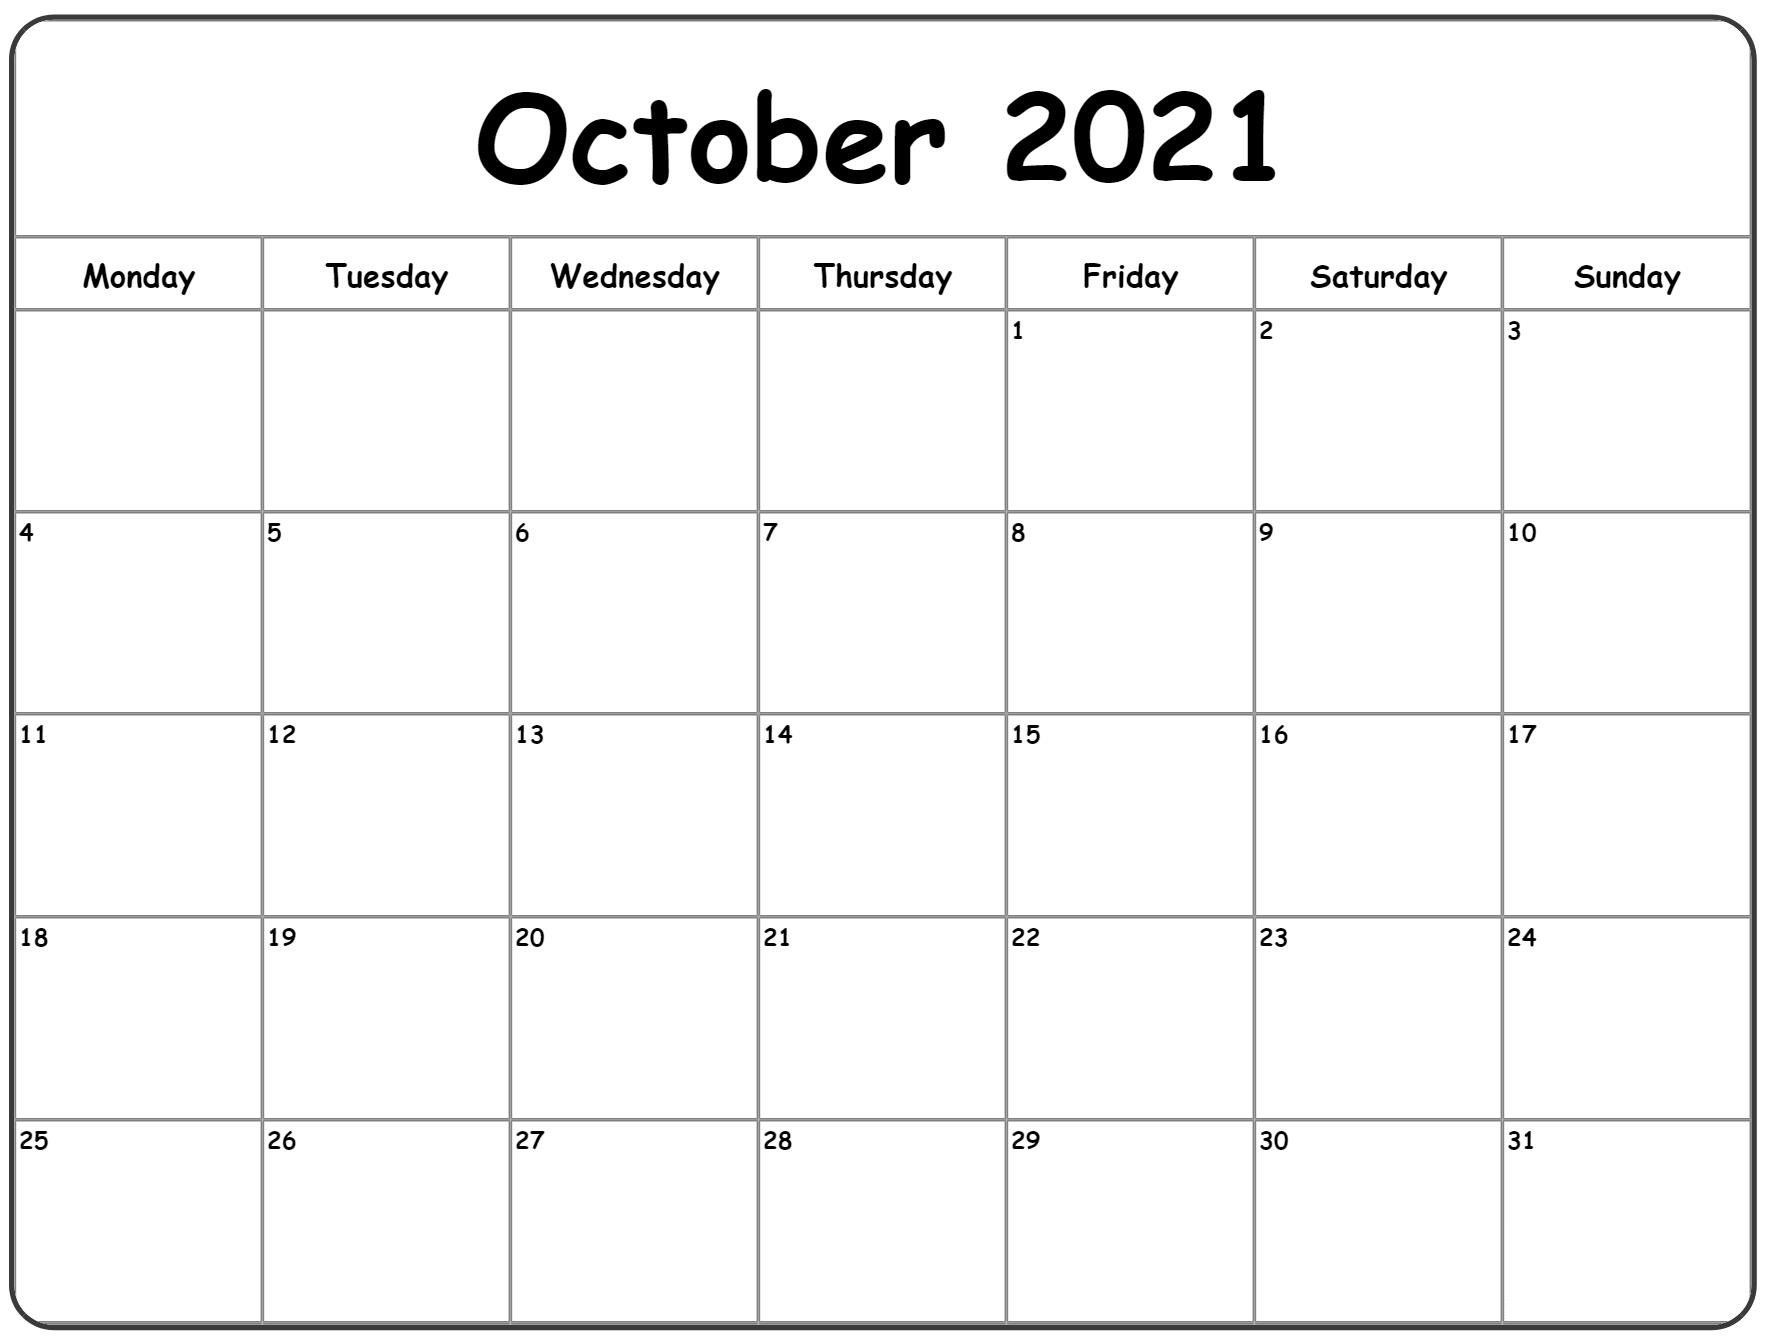 October 2021 Calendar With Holidays PDF